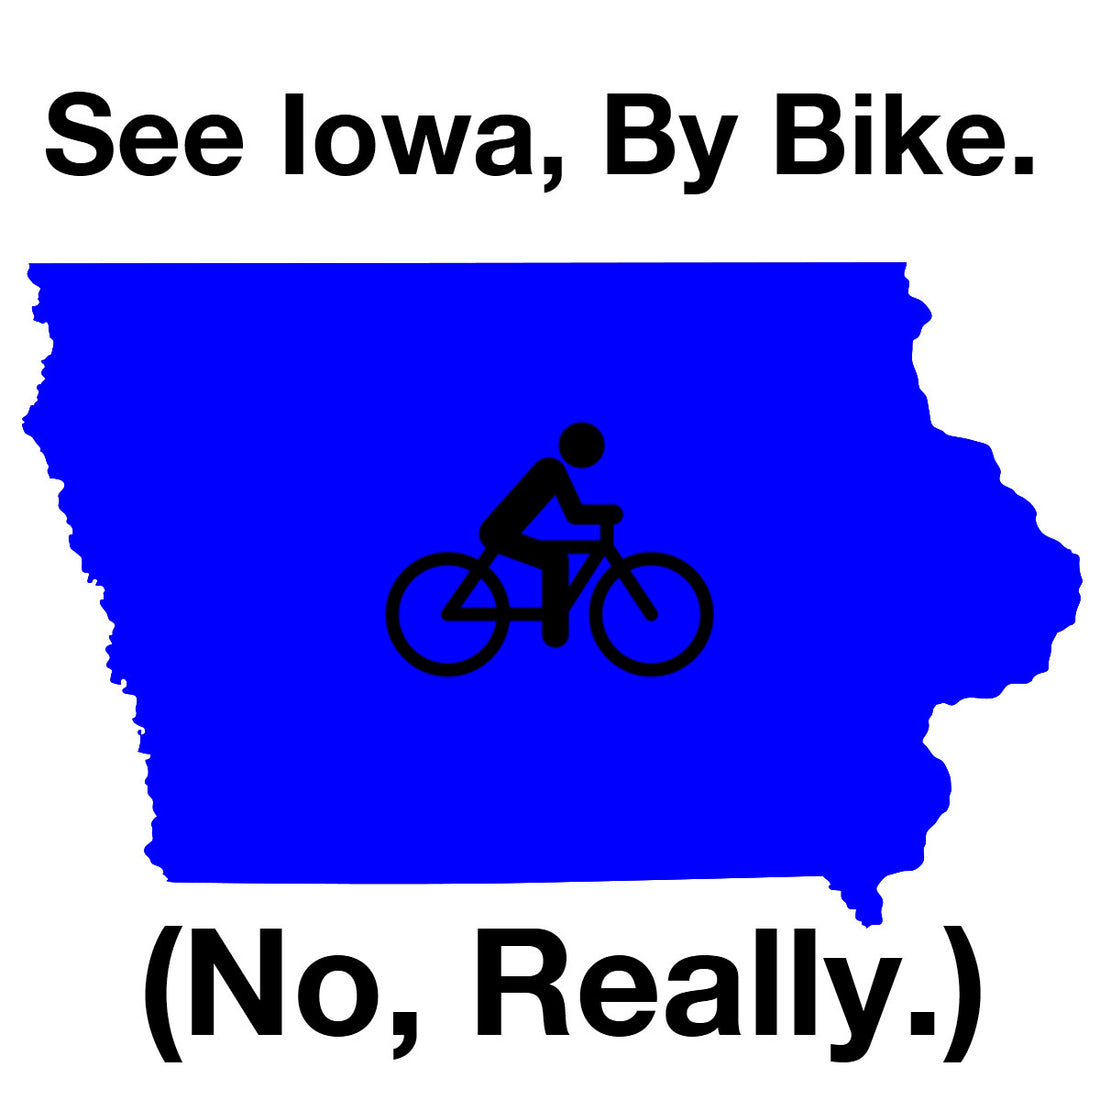 See Iowa, by Bike. No, really! - PROOZY